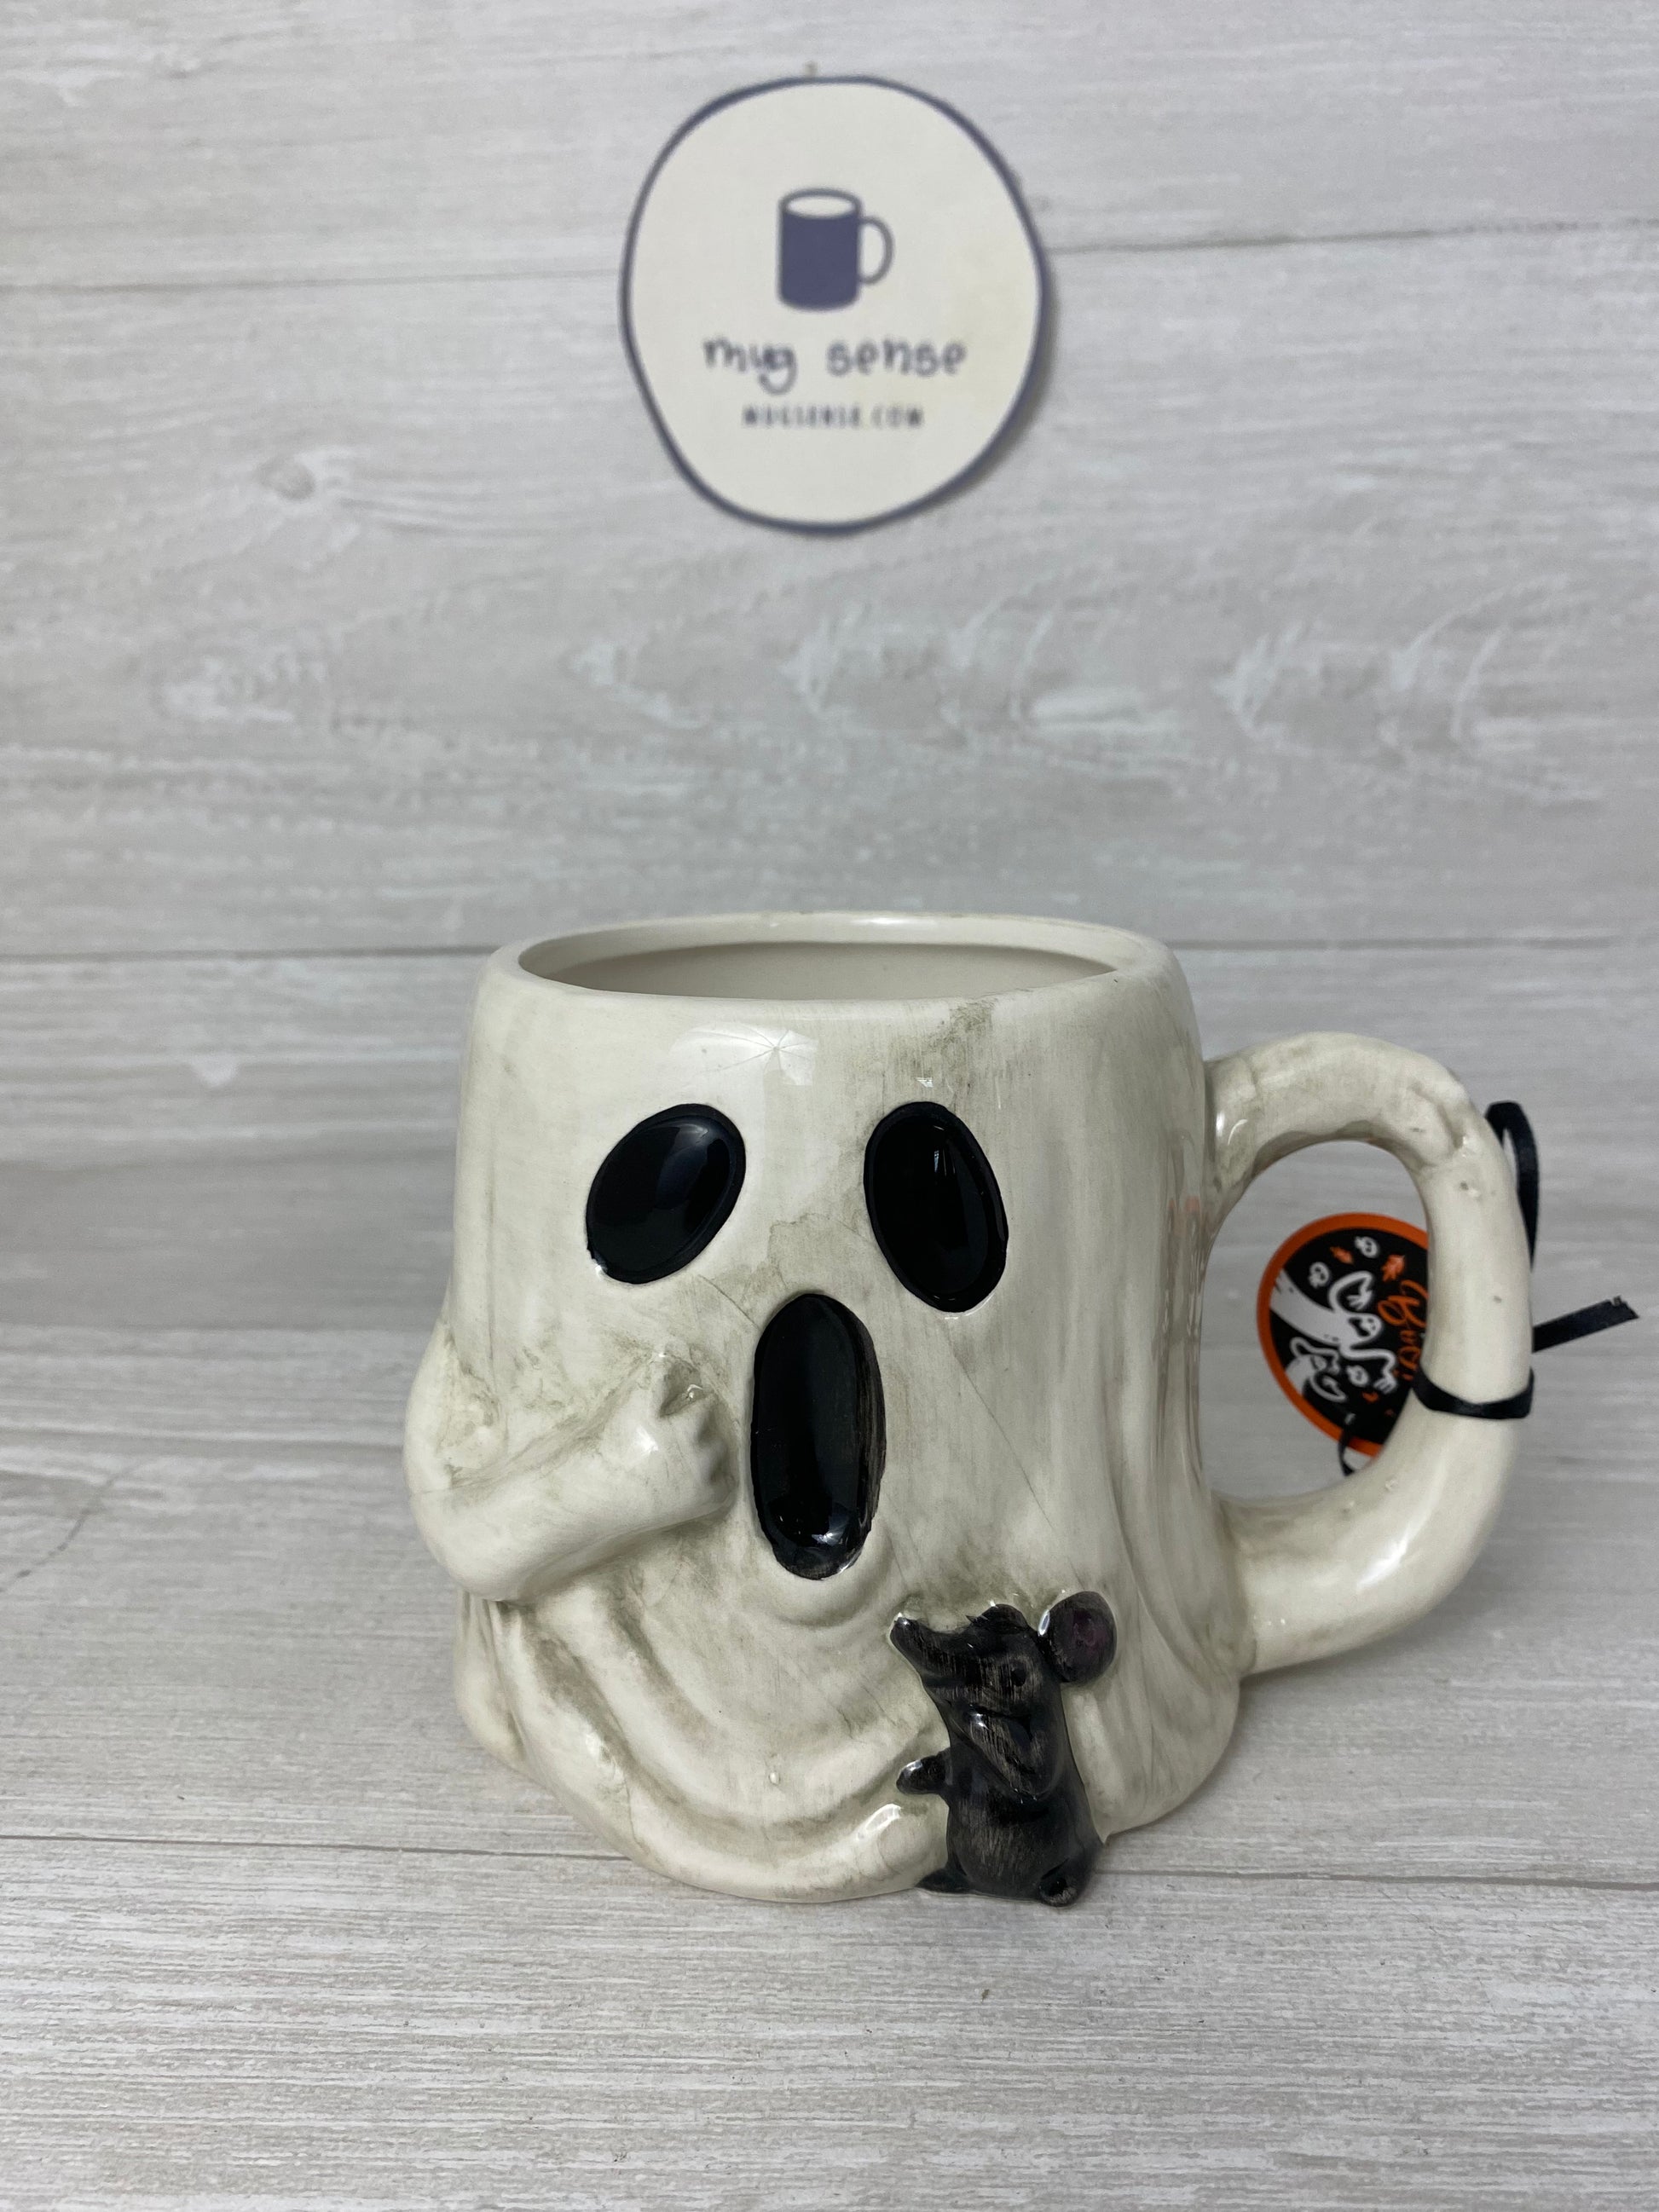 Blue Sky Ghost Scared Of Mouse Mug – Mug Sense